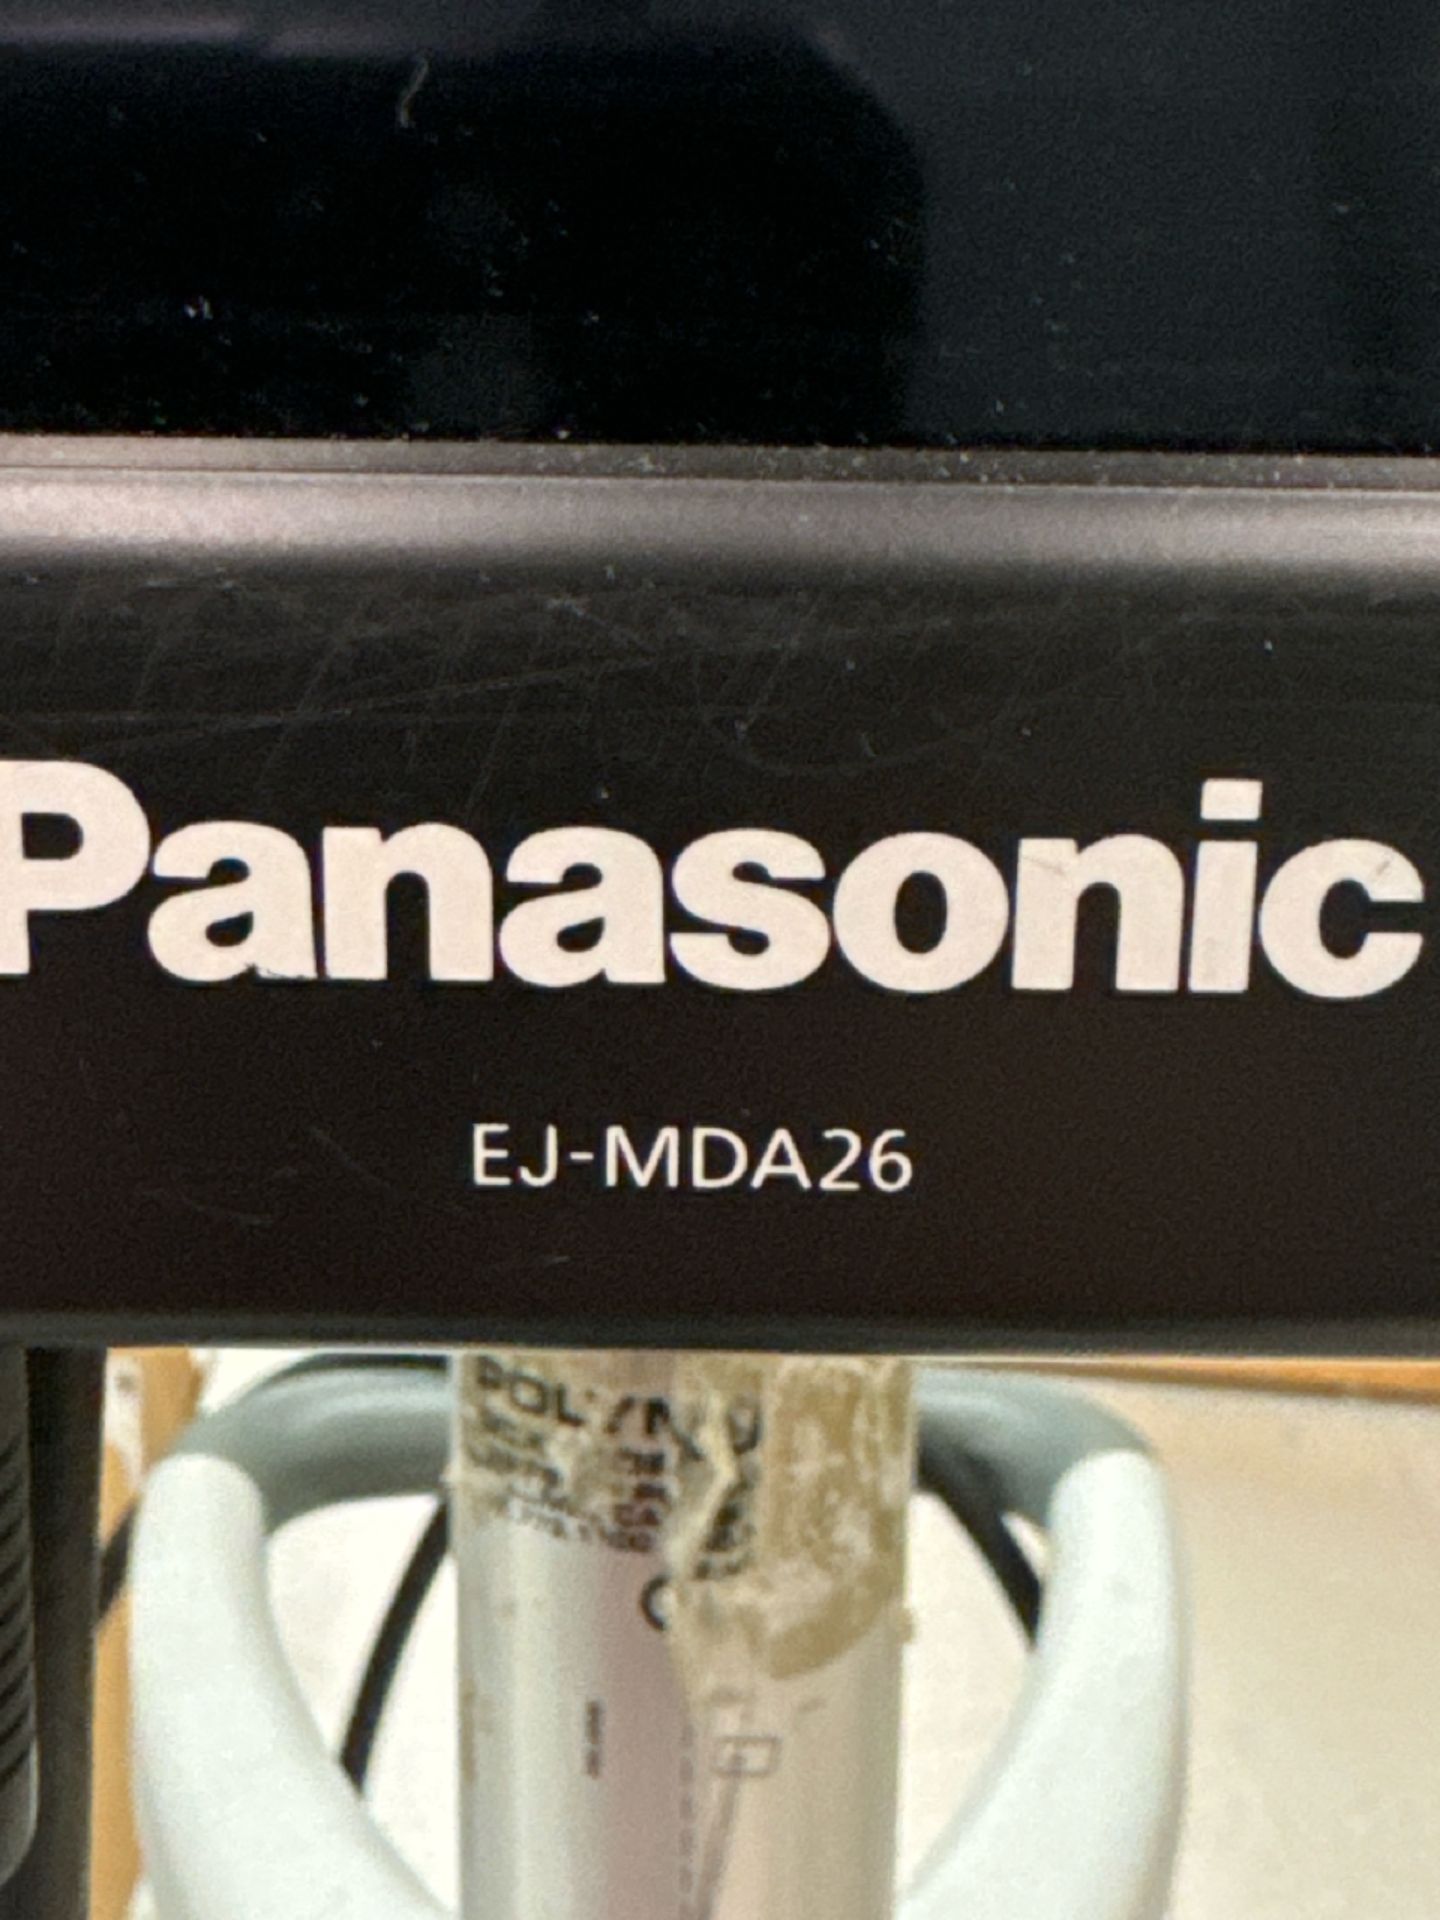 Panasonic 3D Medical Monitor w/ Rolling Mount - Image 6 of 6